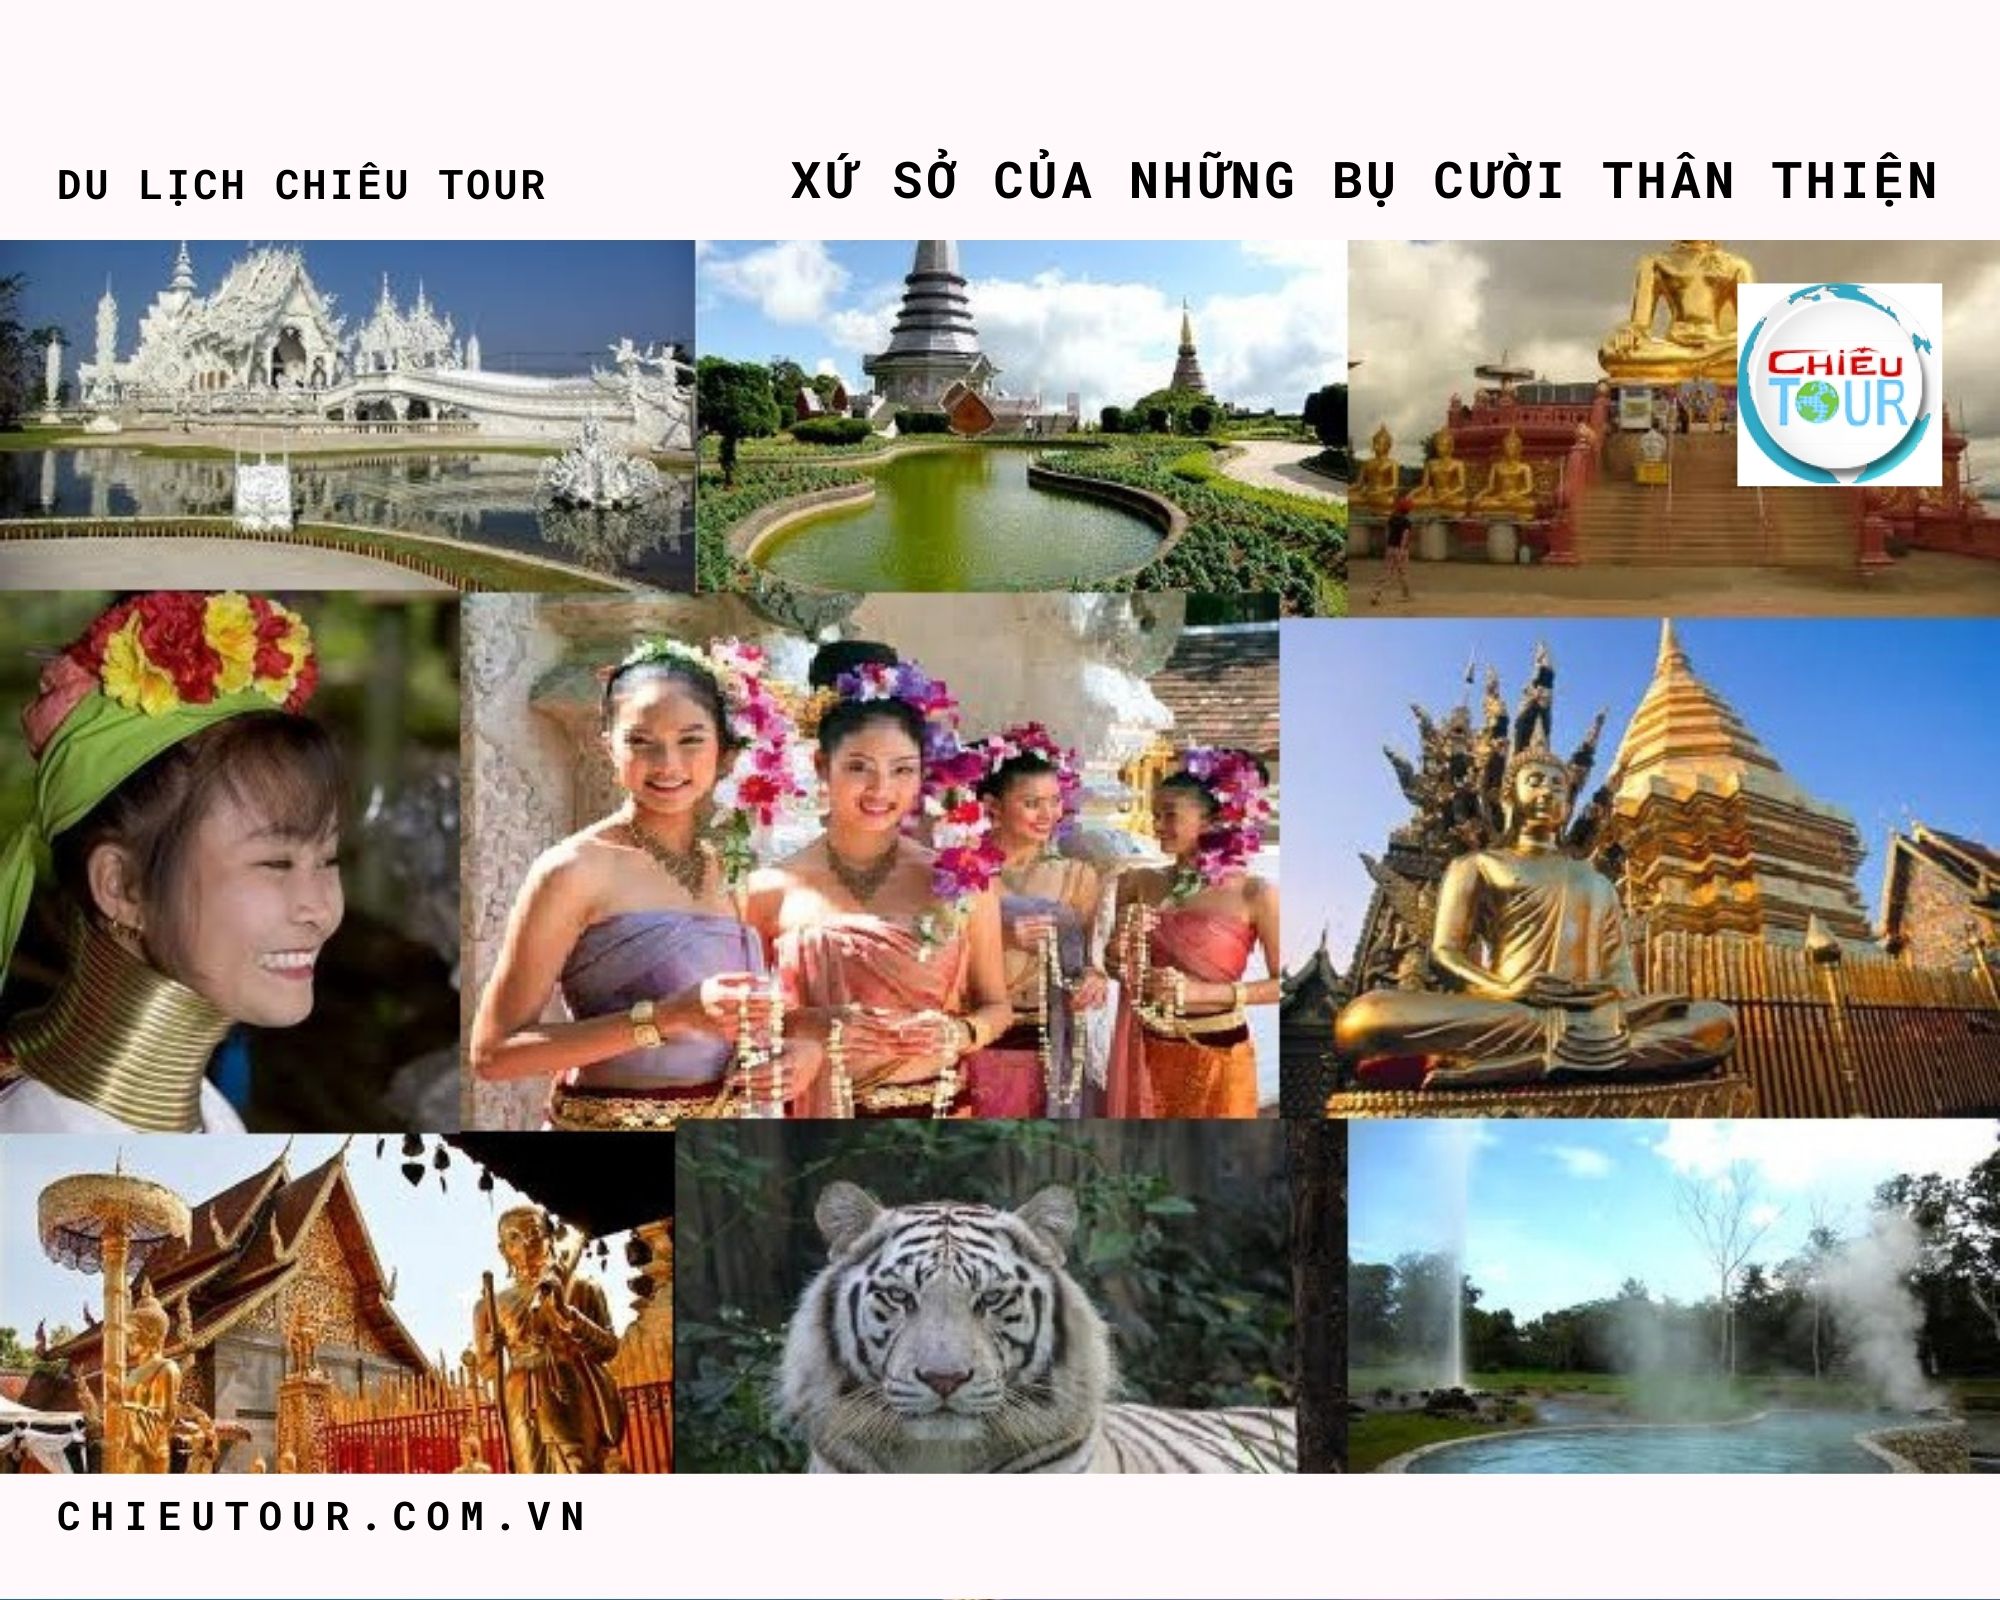 Tour du lịch Thái Lan Bangkok Pattaya